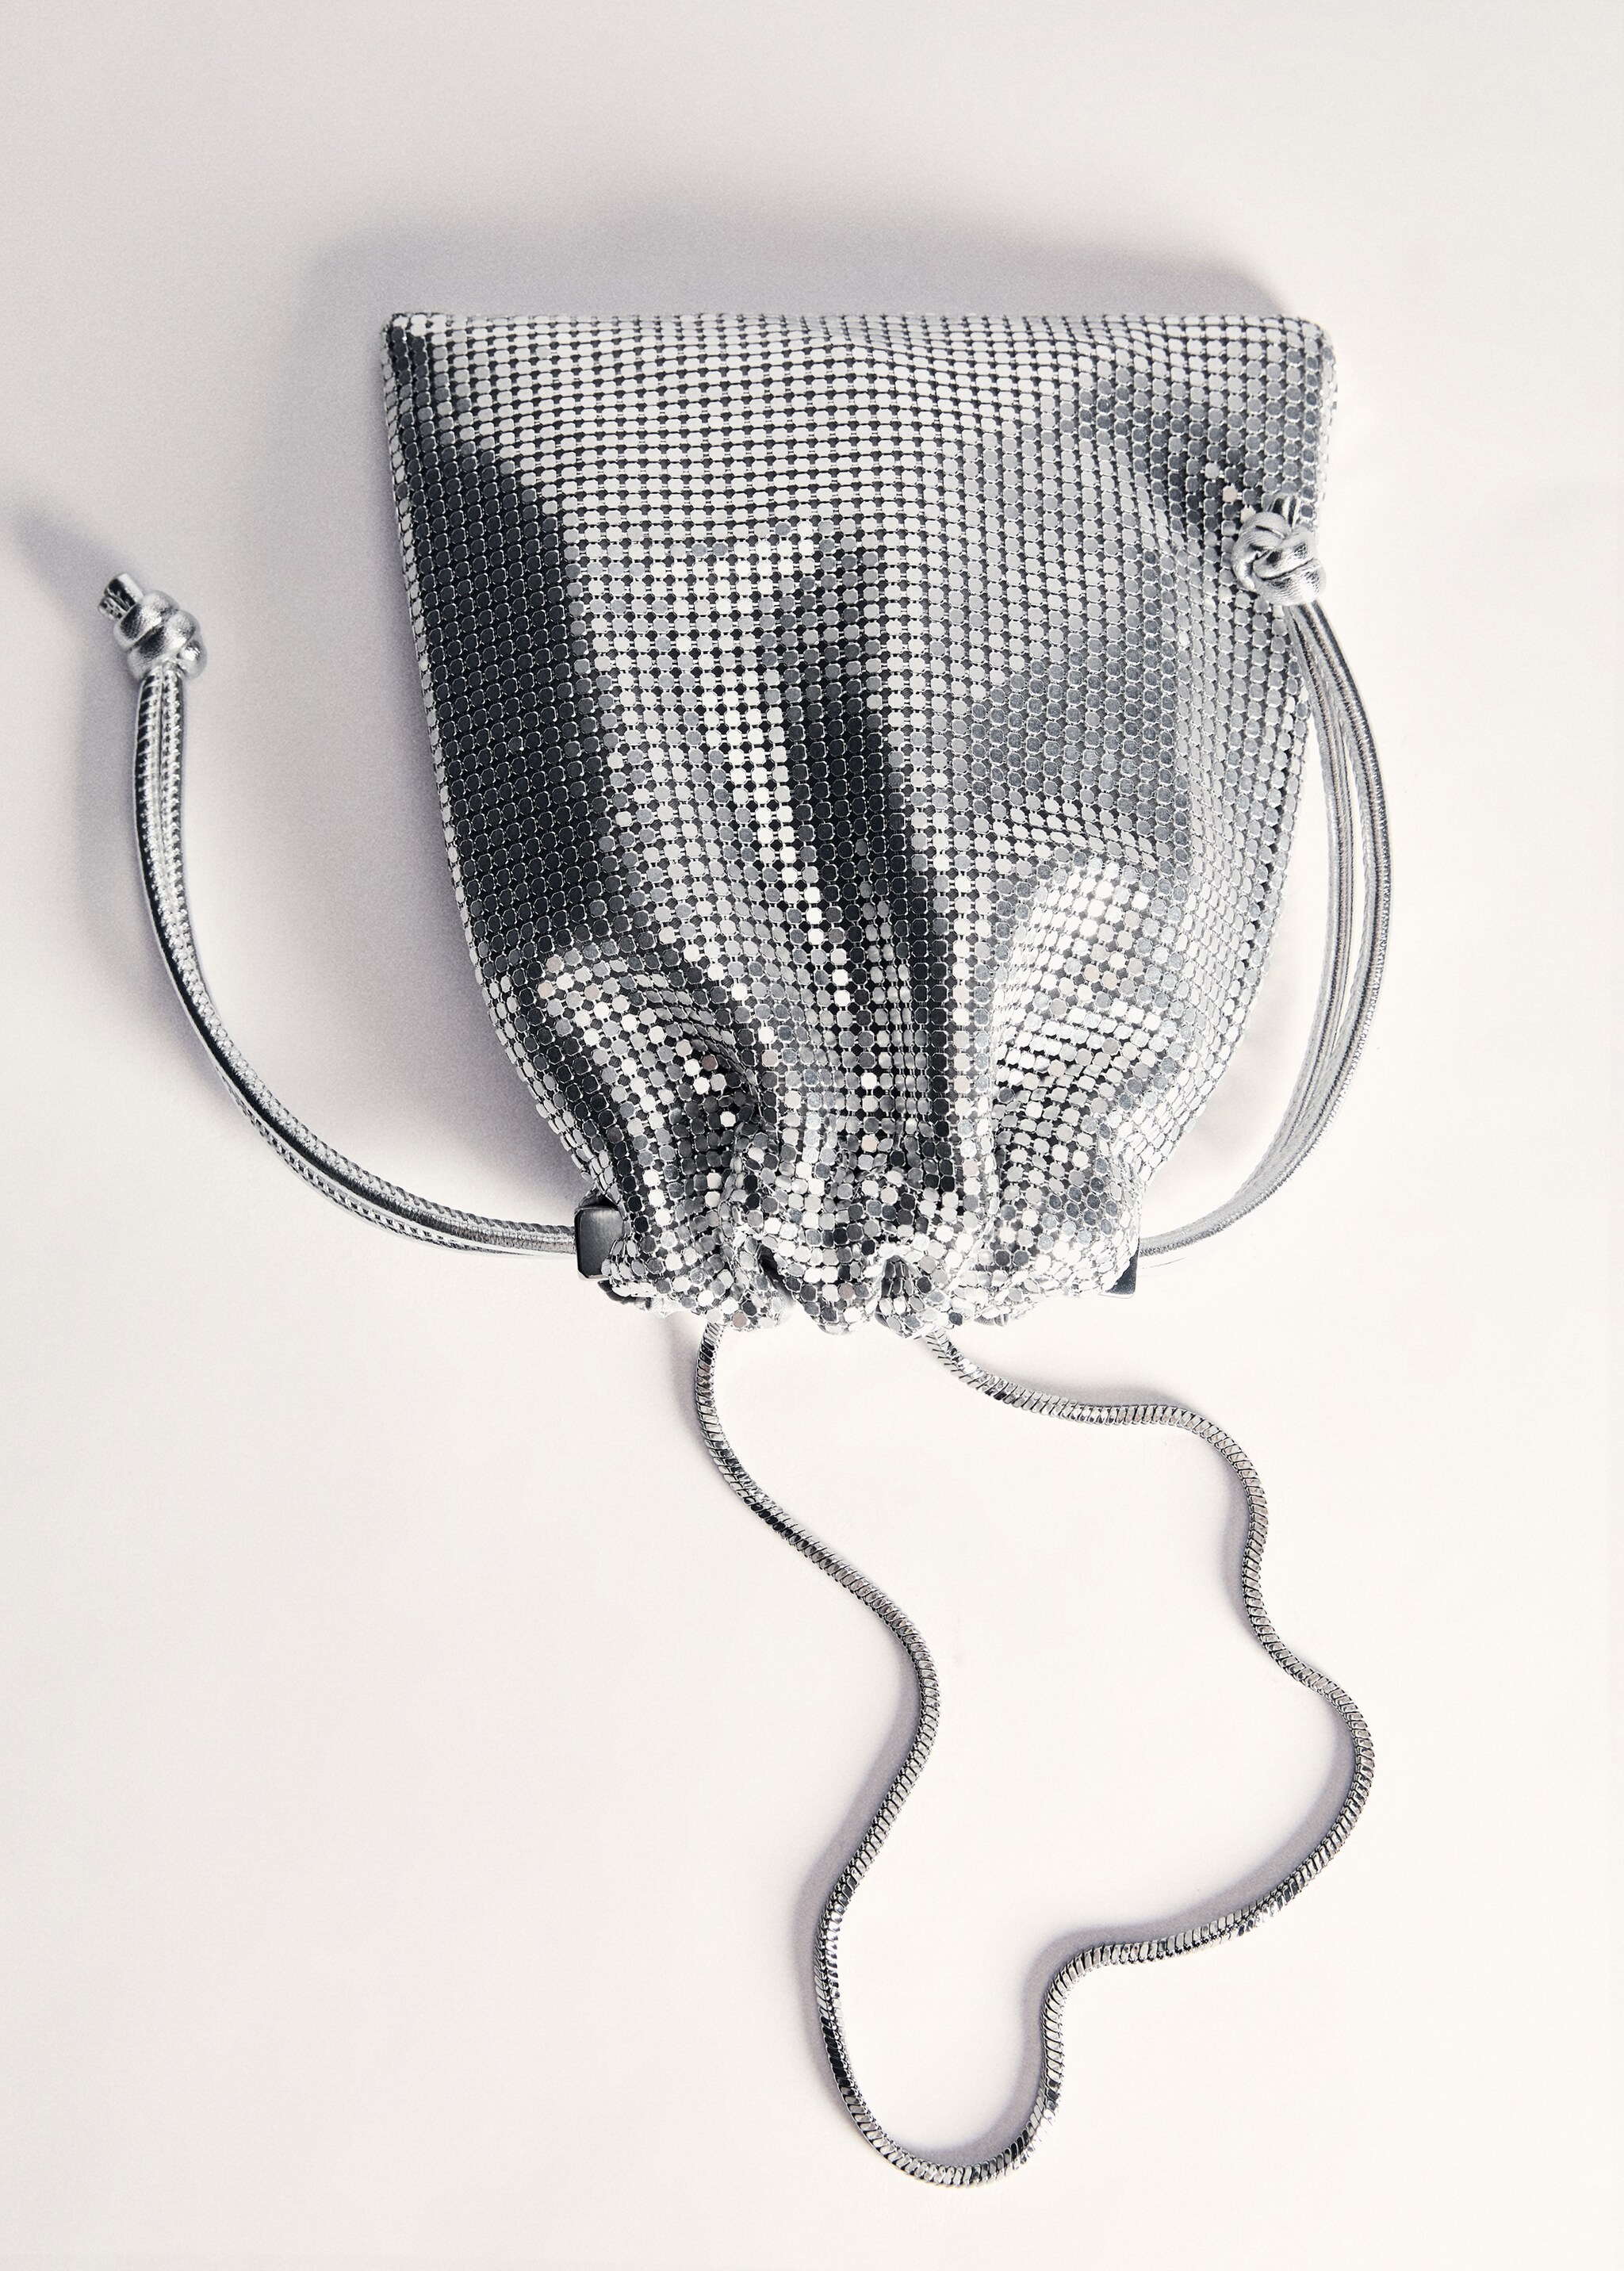 Sequin handbag - Details of the article 5